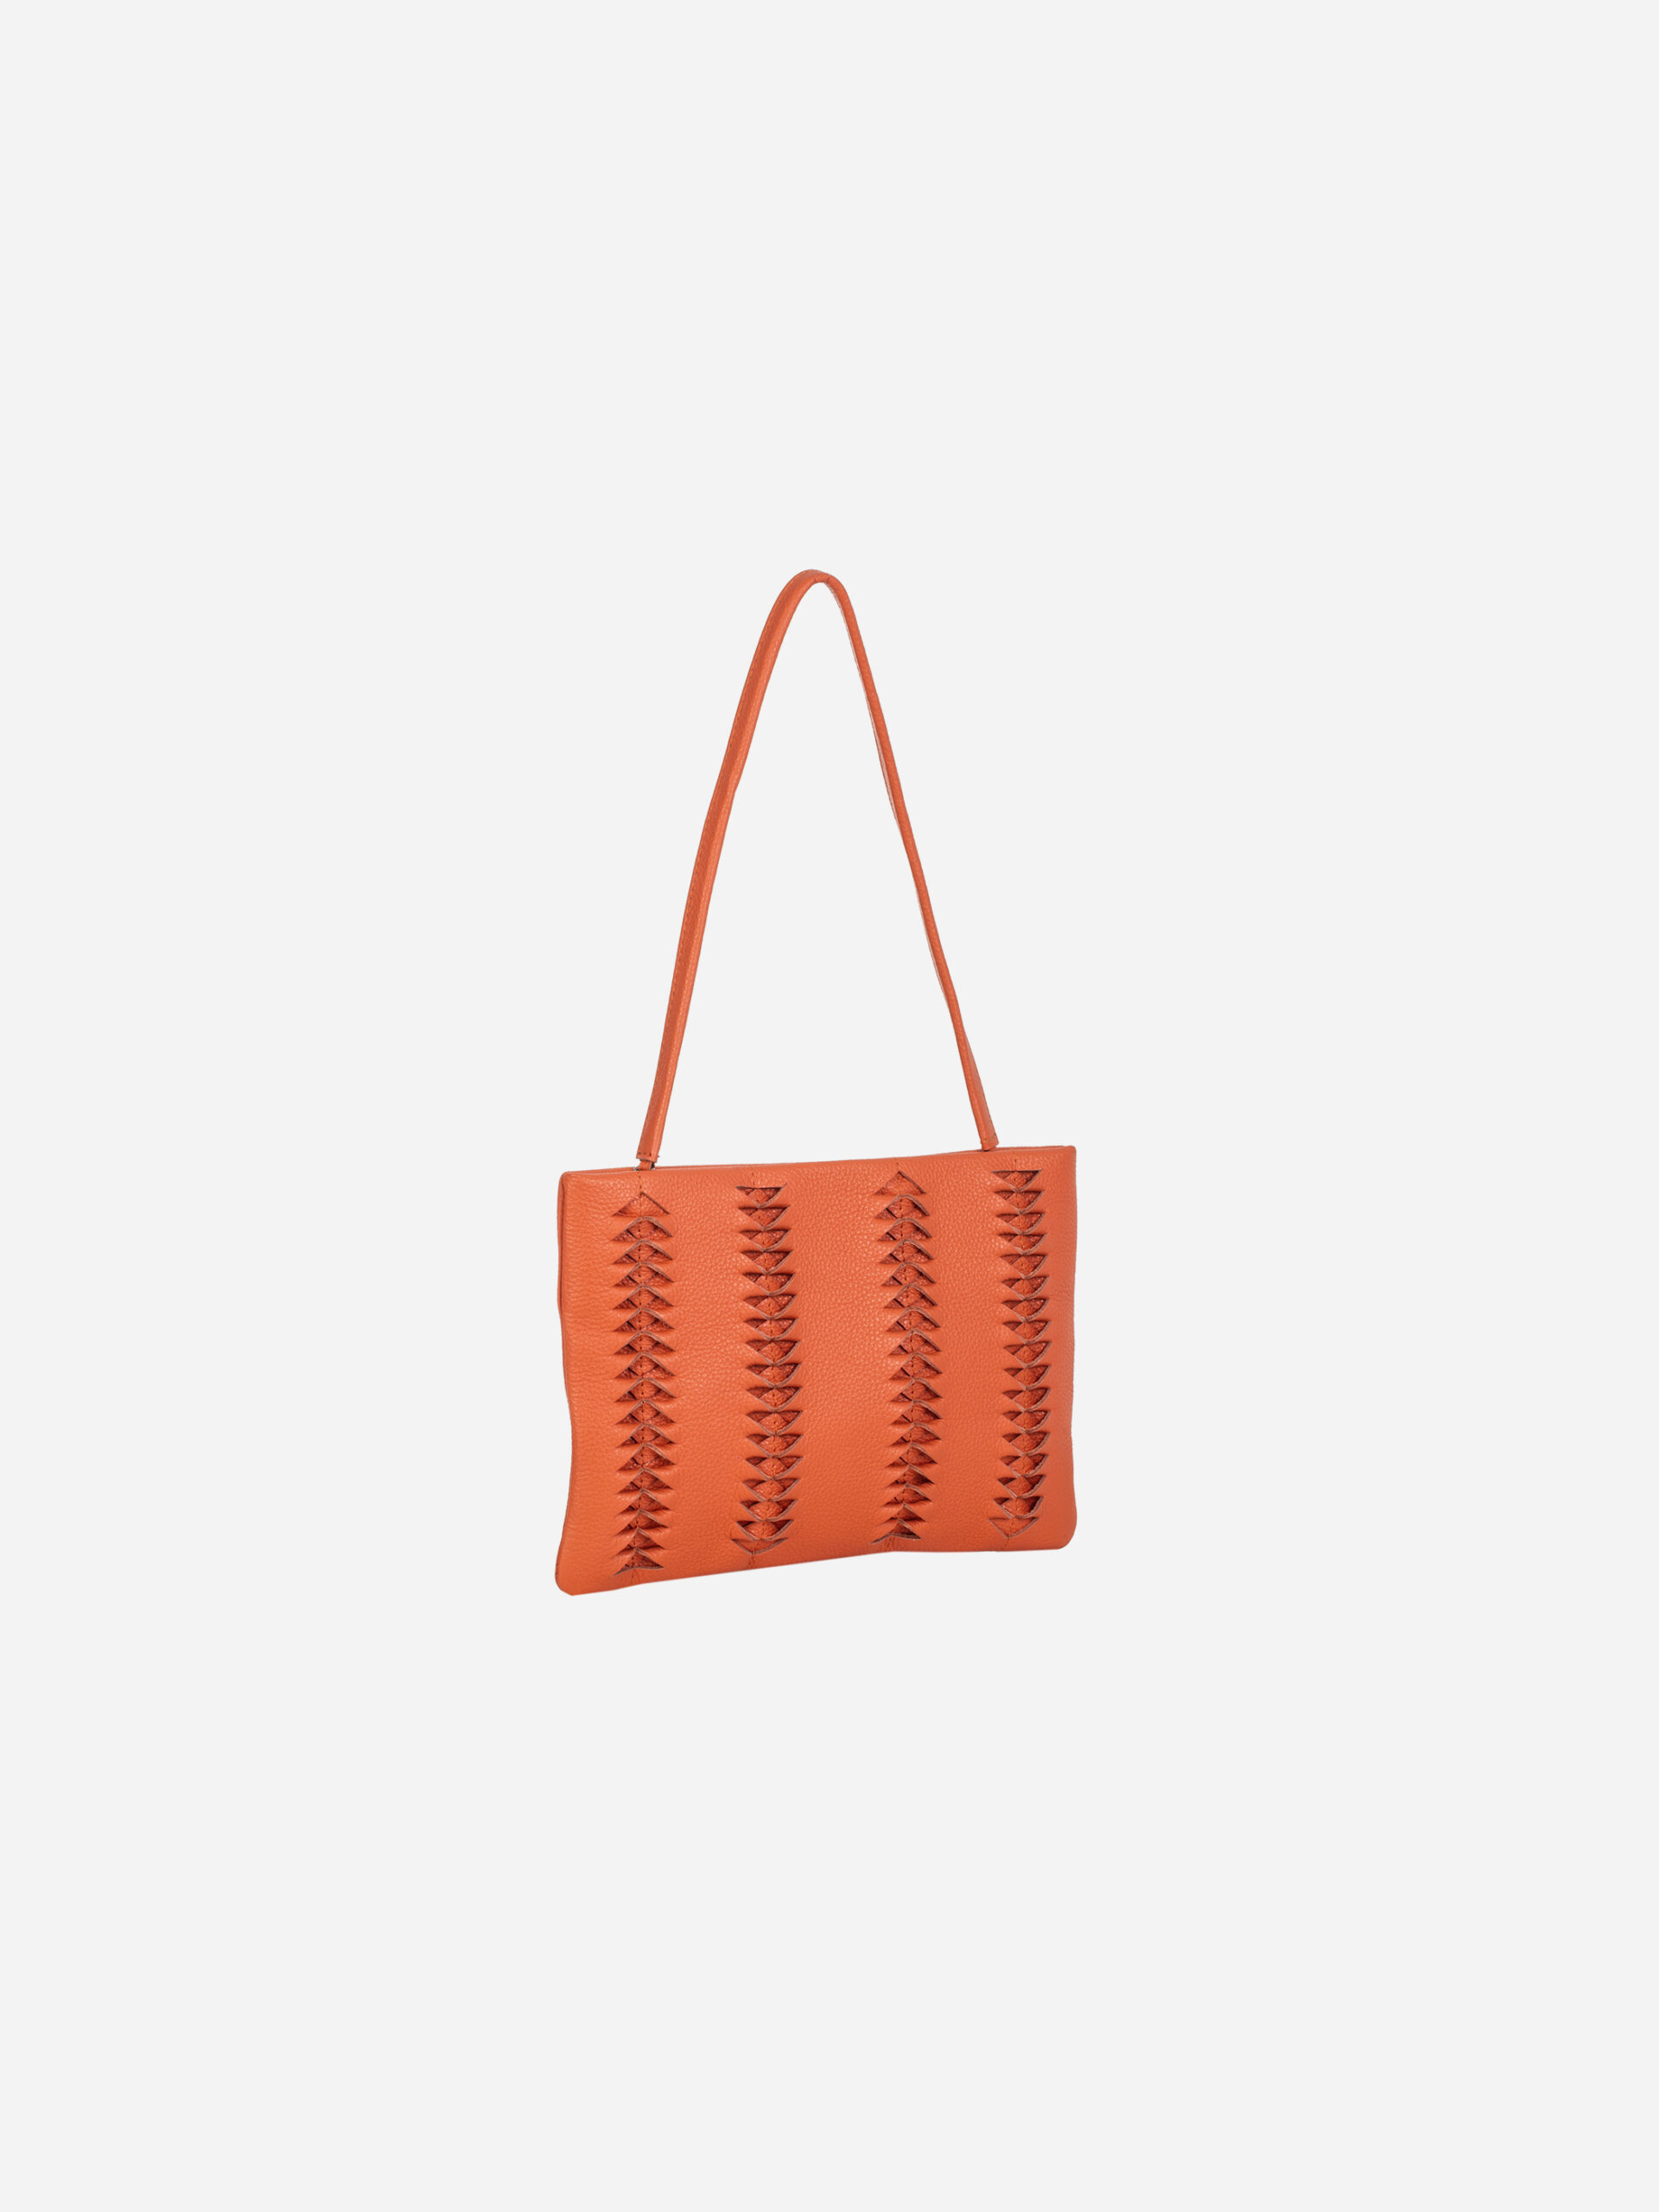 PARK_HOUSE_fishbone-clutch-retro-orange-leather-bag-pochette-greek-designers-matchboxathens